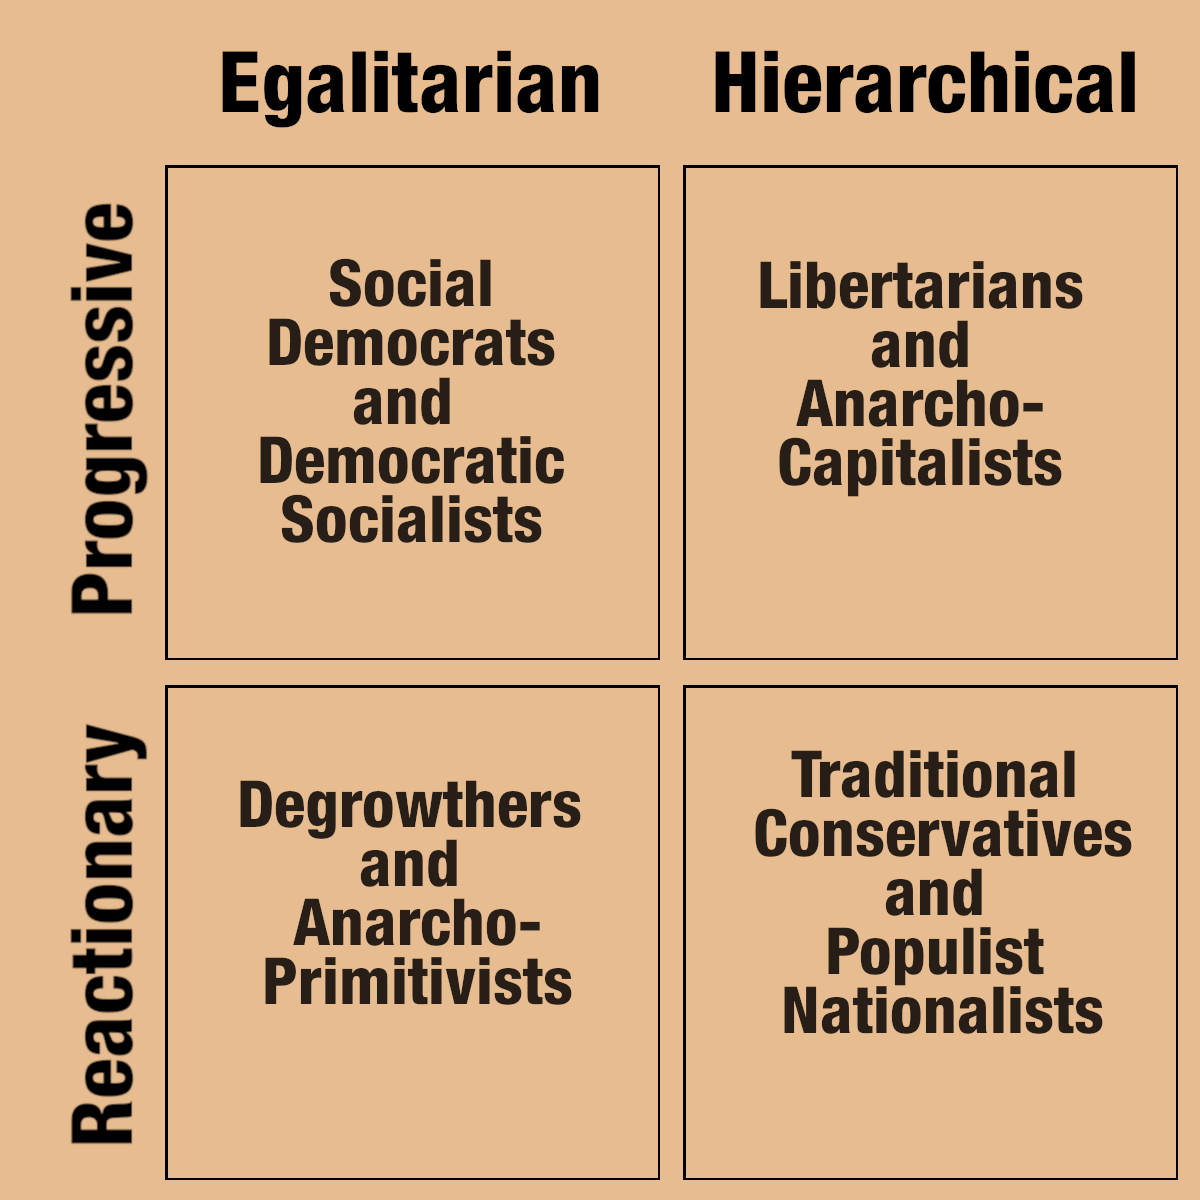 egalitarian reactionaries